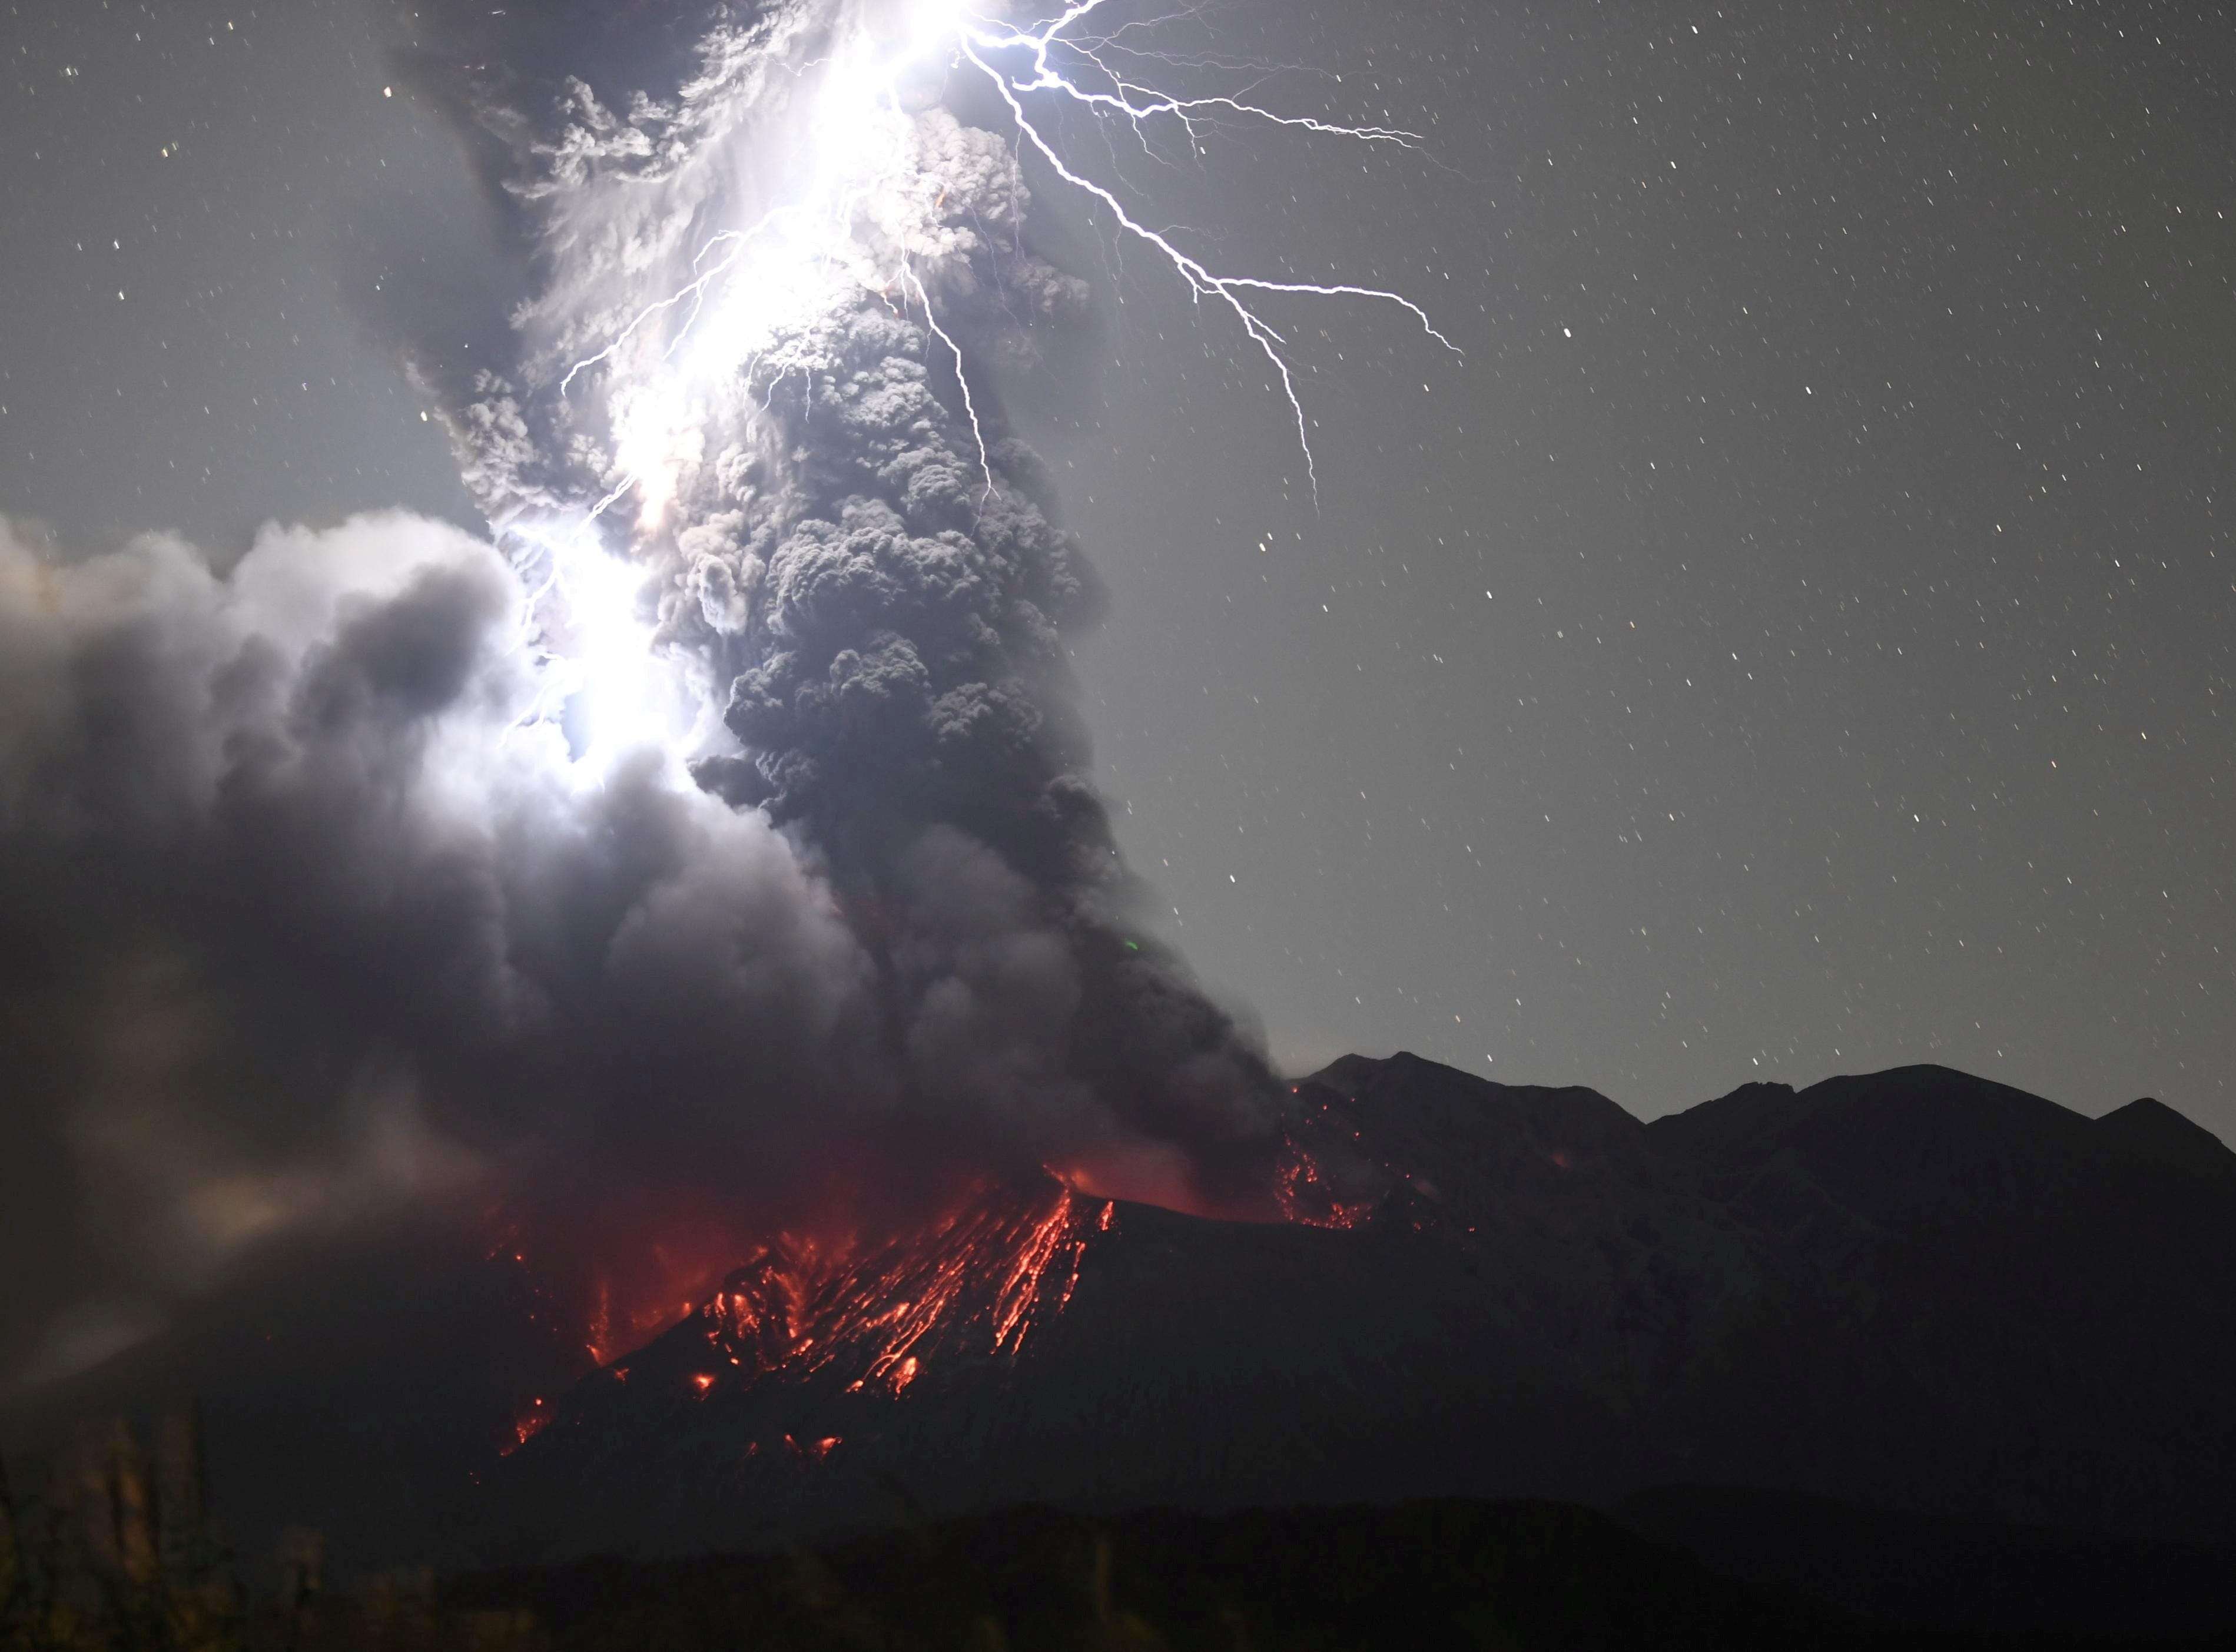 A photographer captured the exact moment lightning struck Japan's